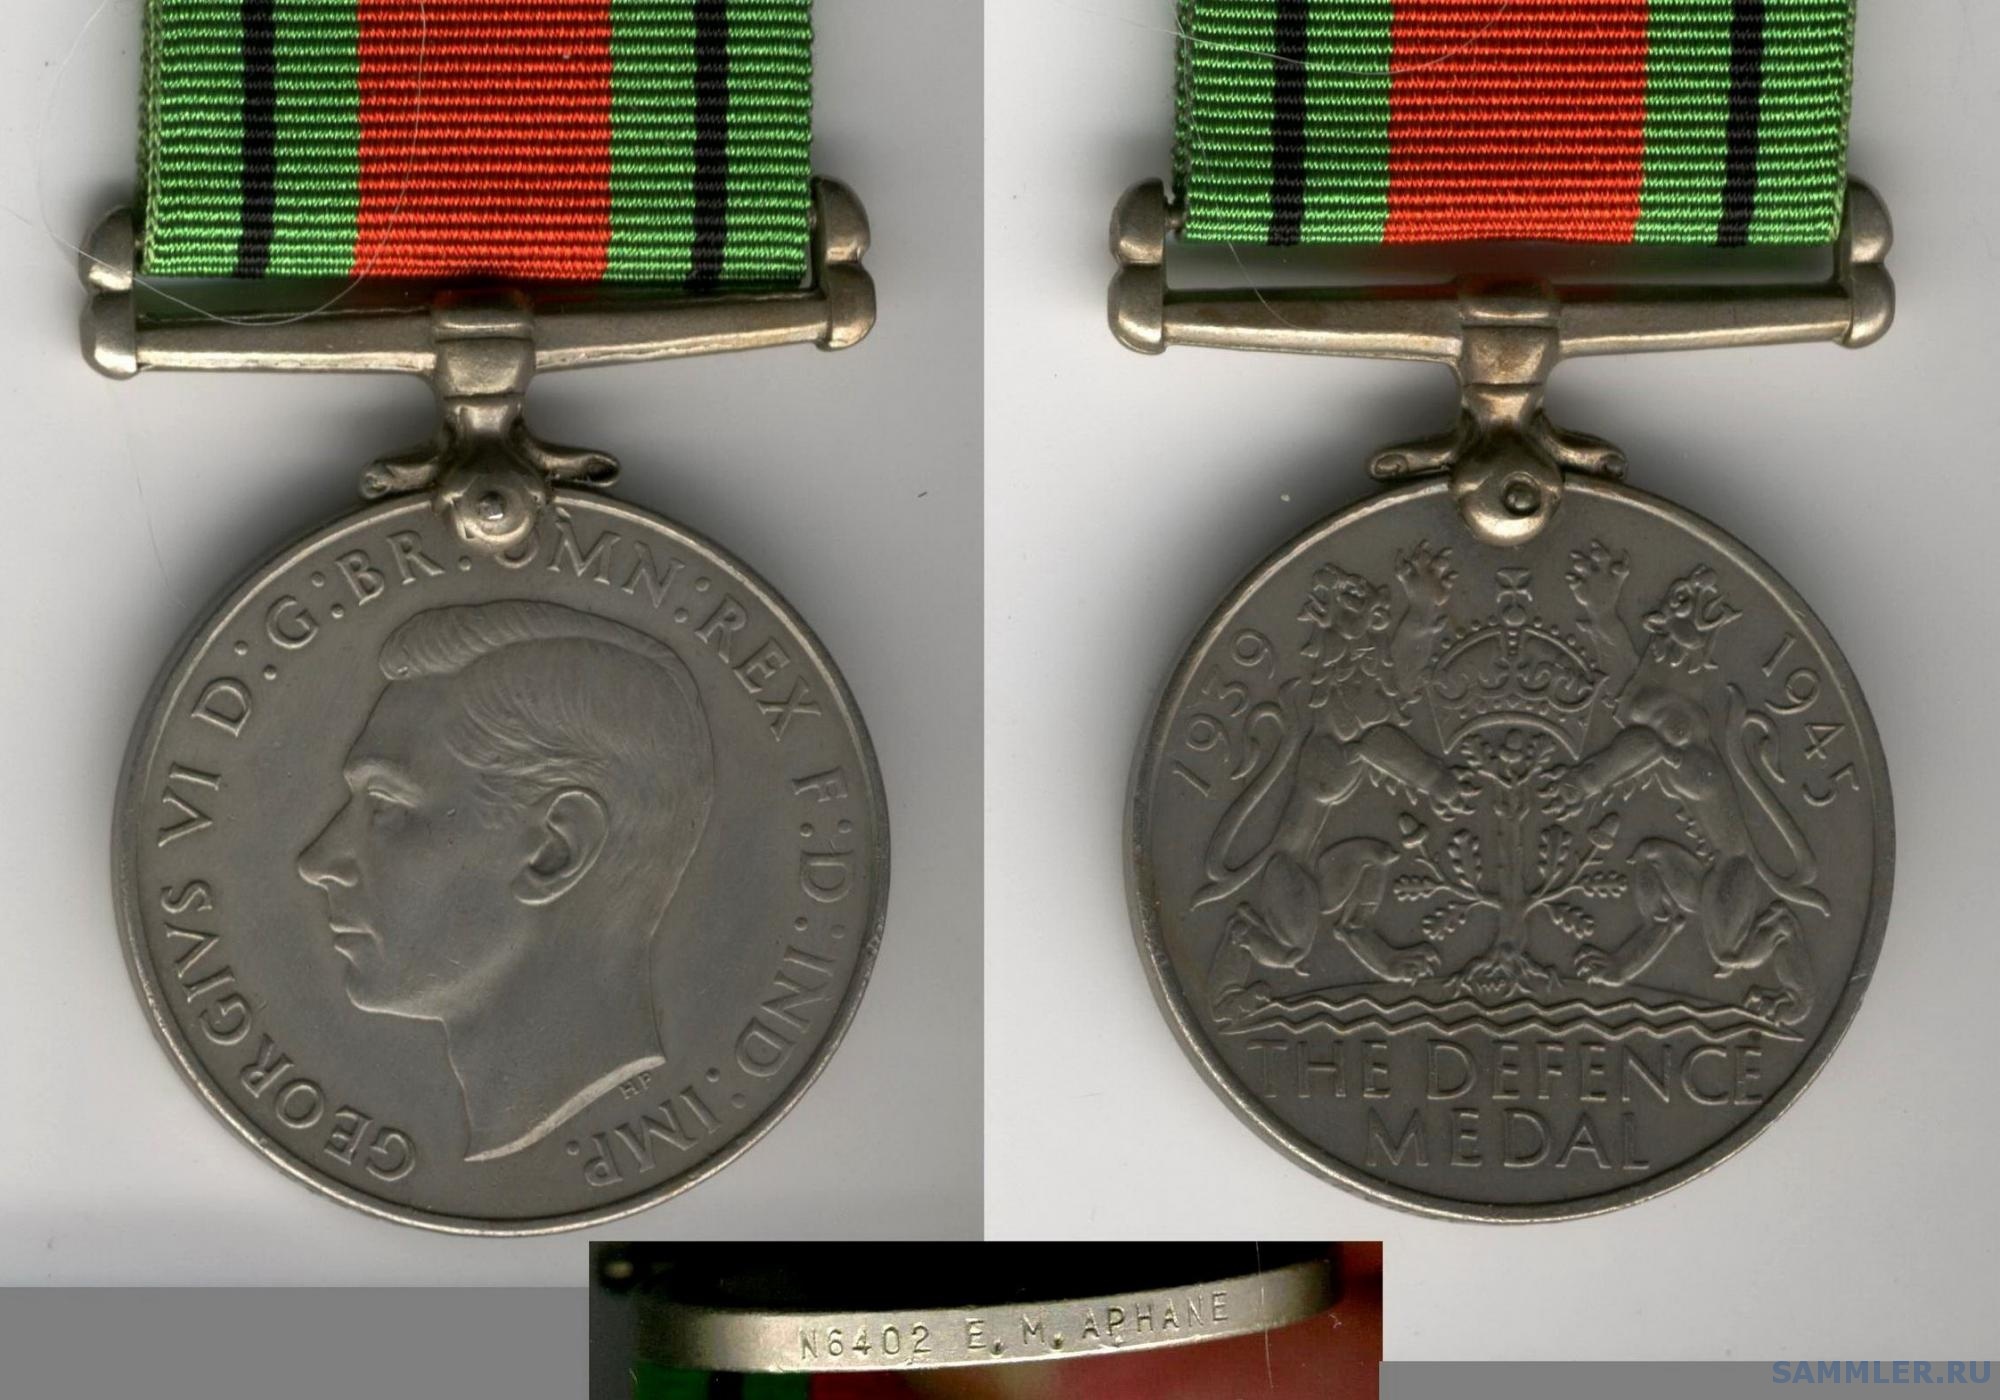 British Defence Medal to N6402 E.M.APHANE .jpg